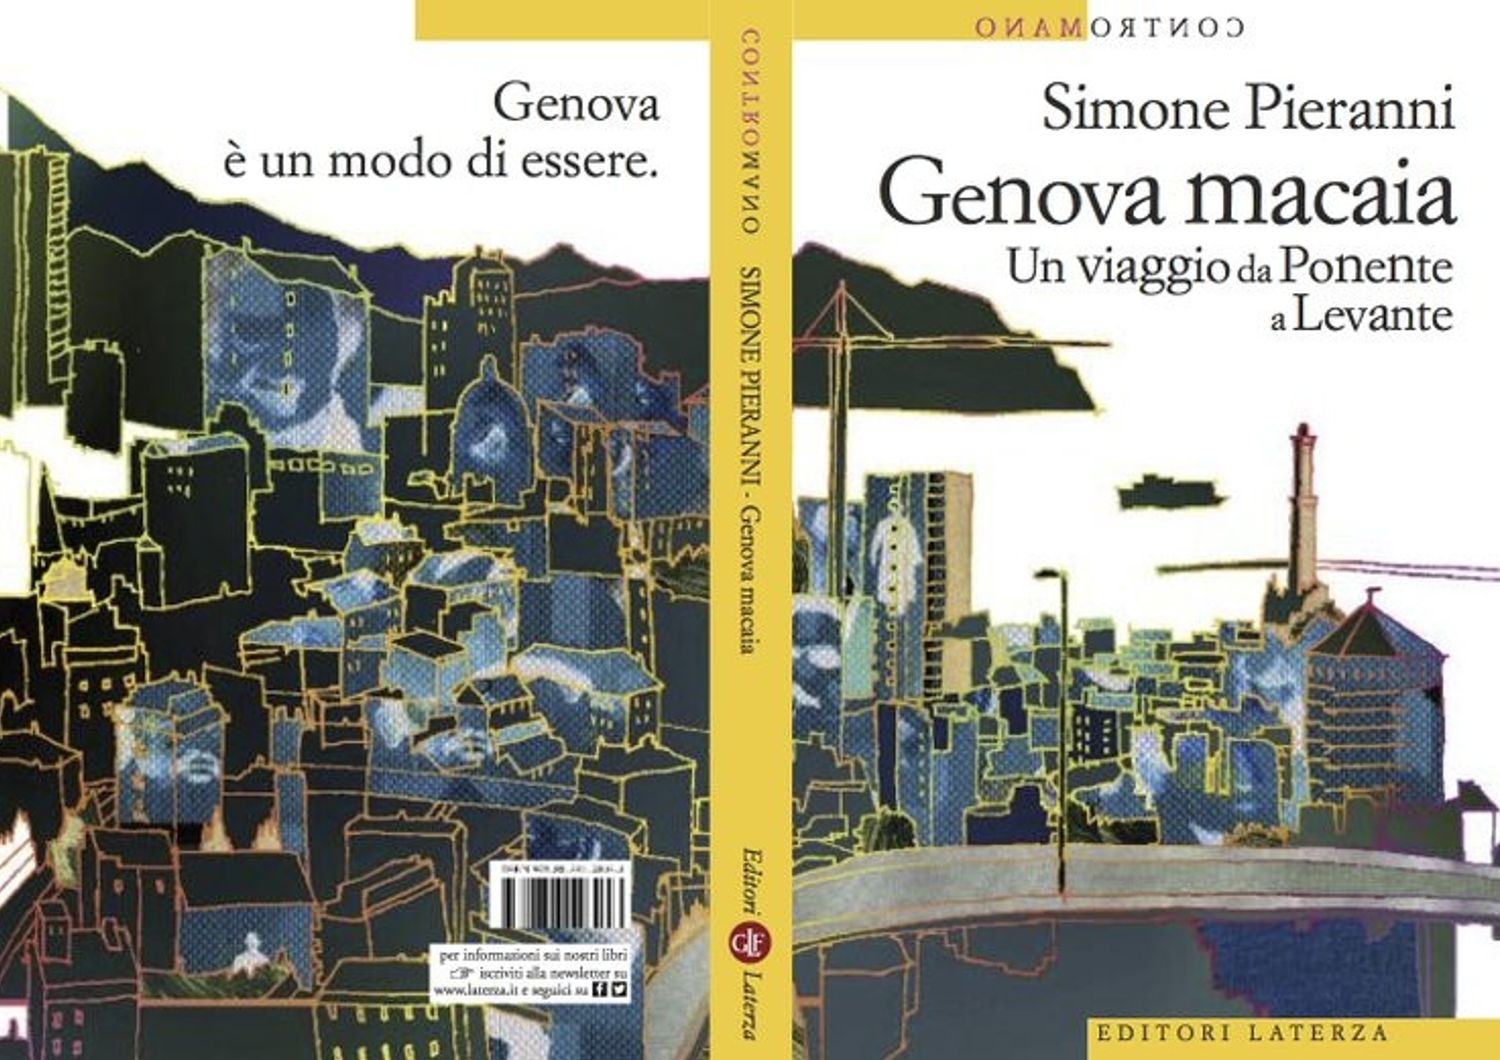 Genova&nbsp;Macaia, un viaggio da Ponente a Levante